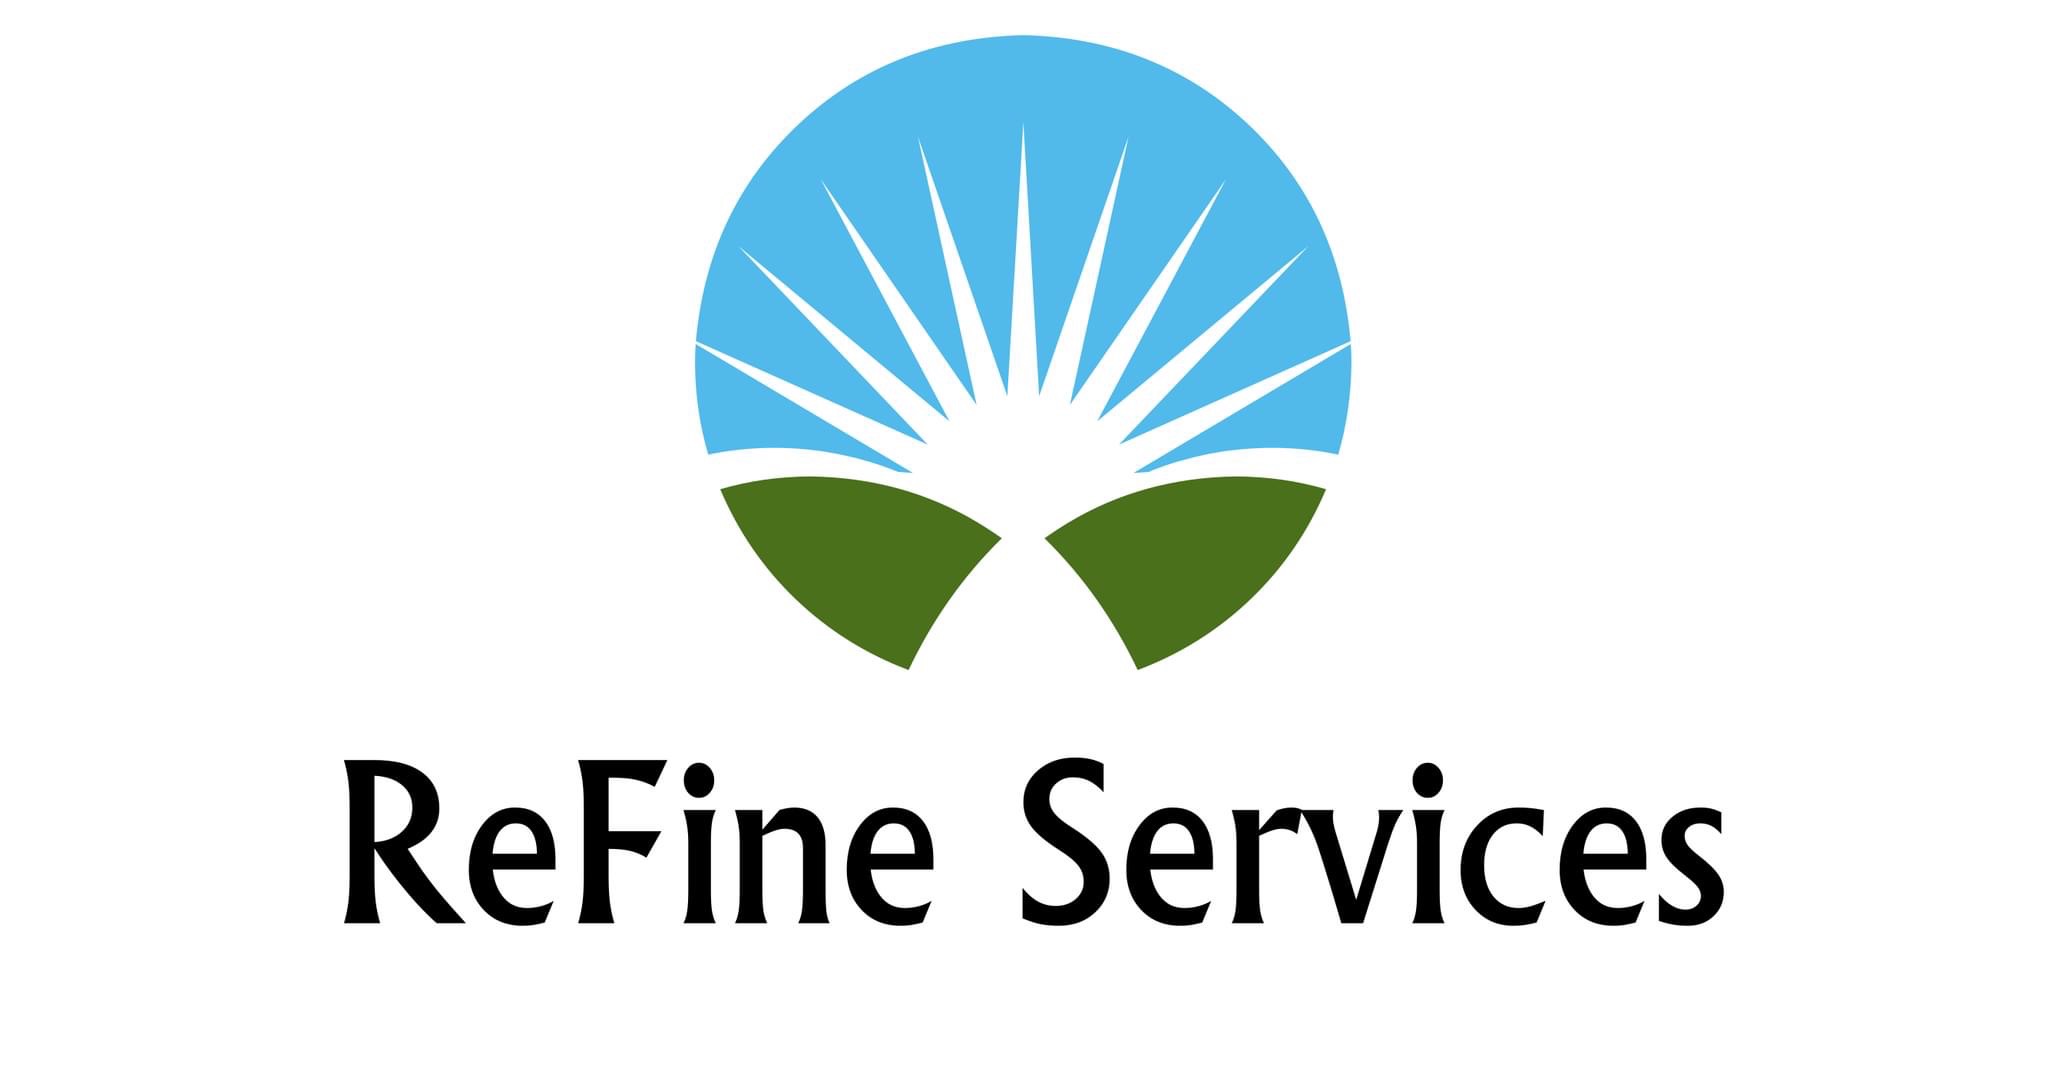 ReFine Services Logo